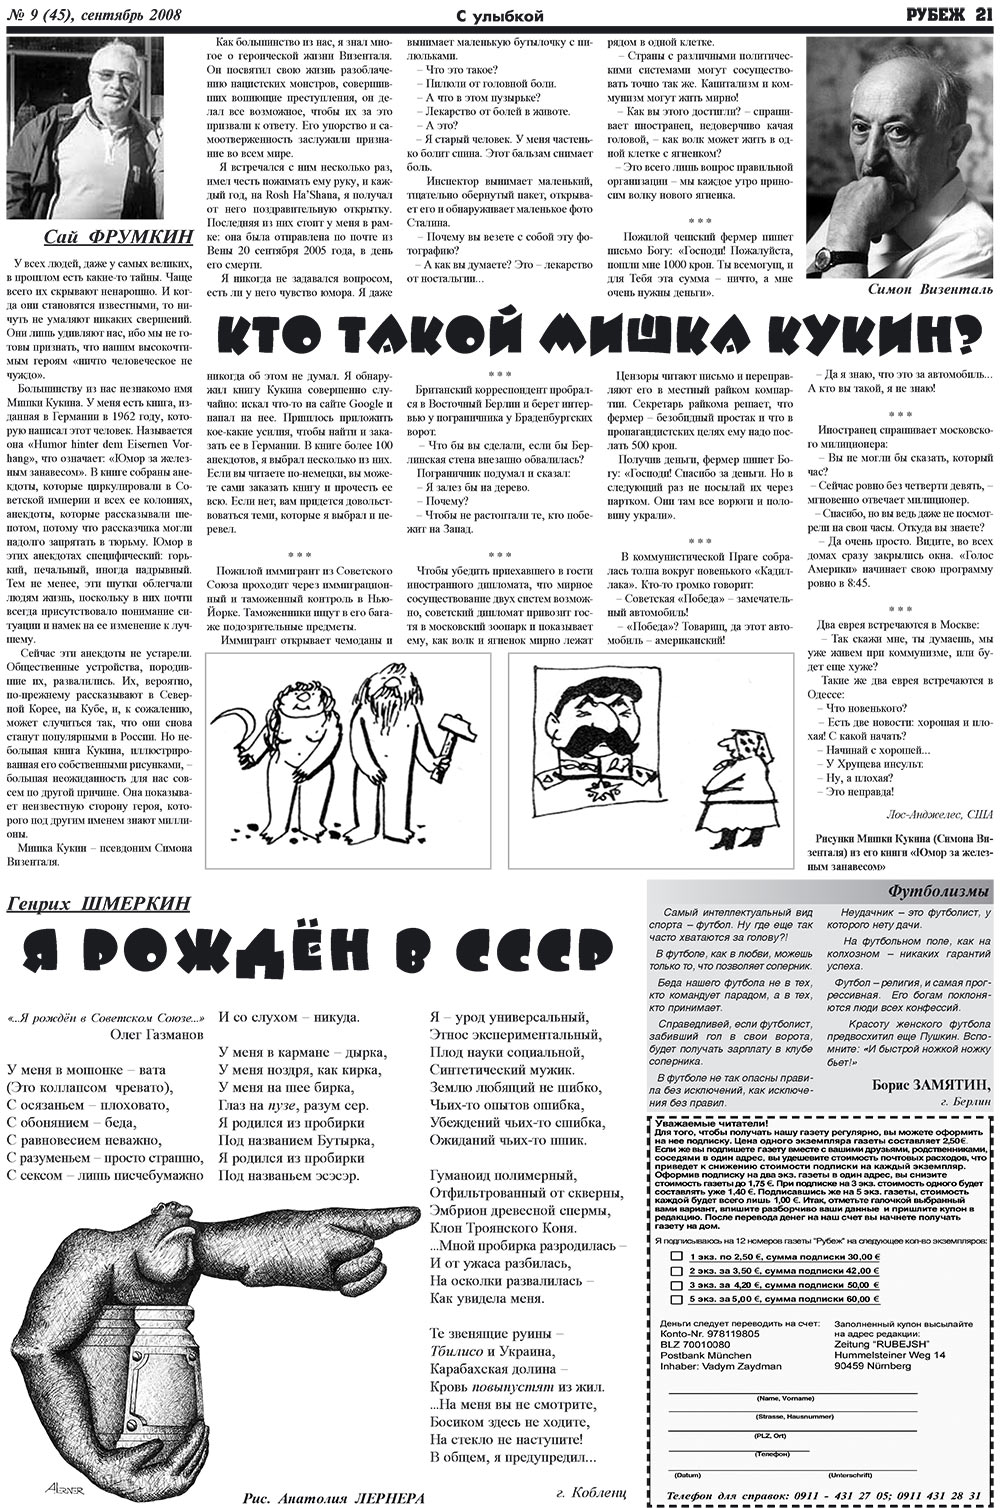 Рубеж, газета. 2008 №9 стр.21